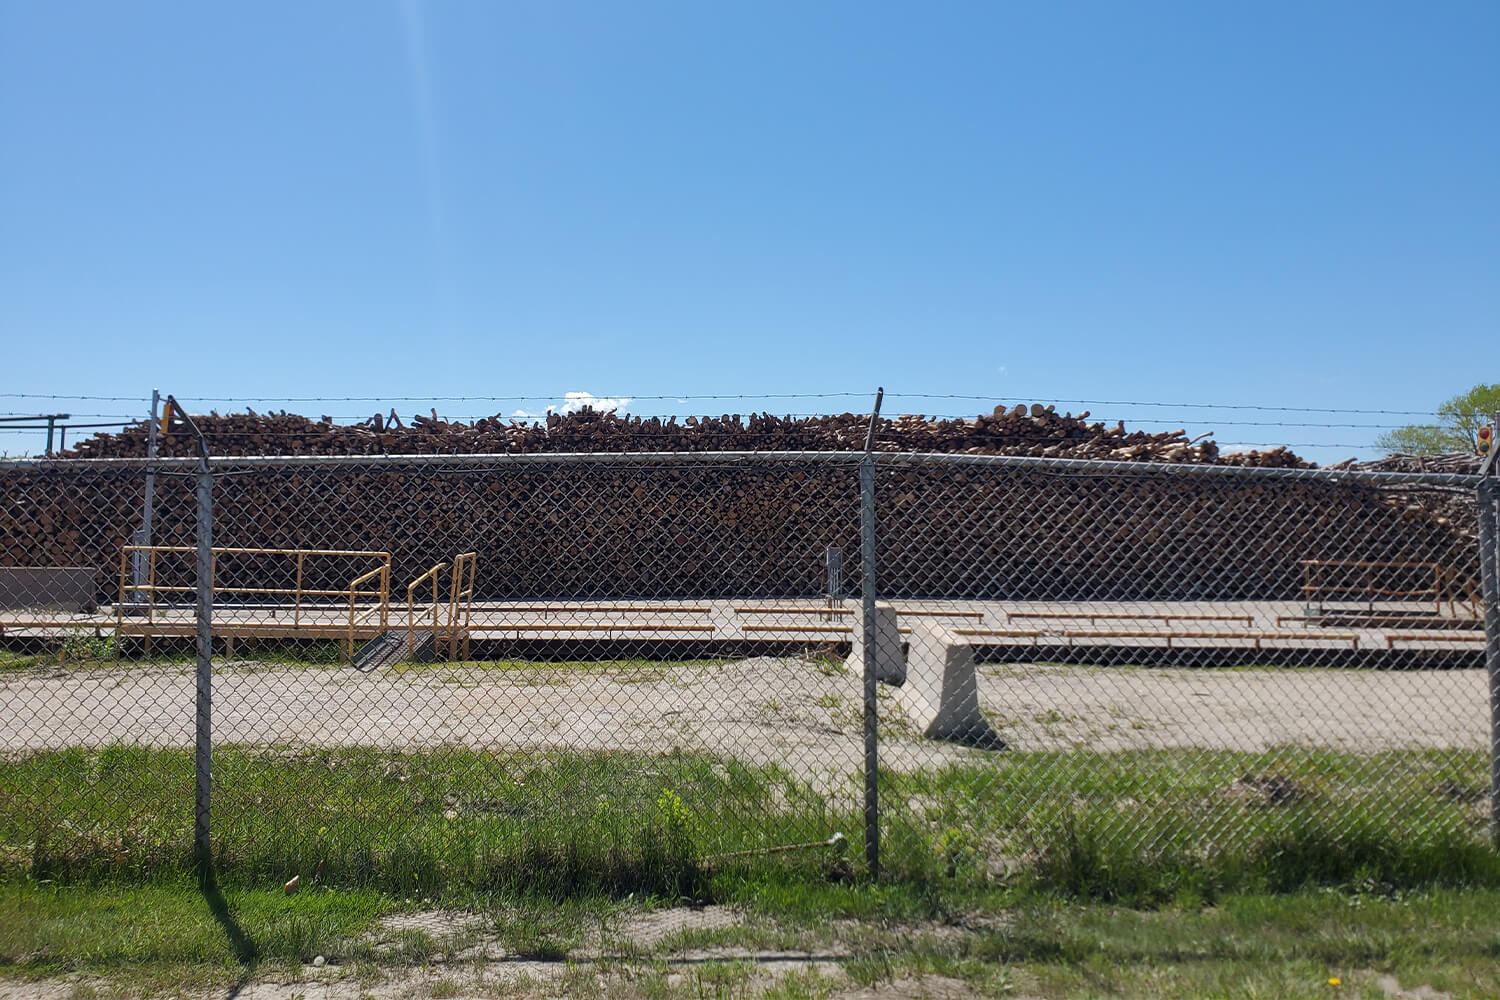 Log storage adjacent to the road